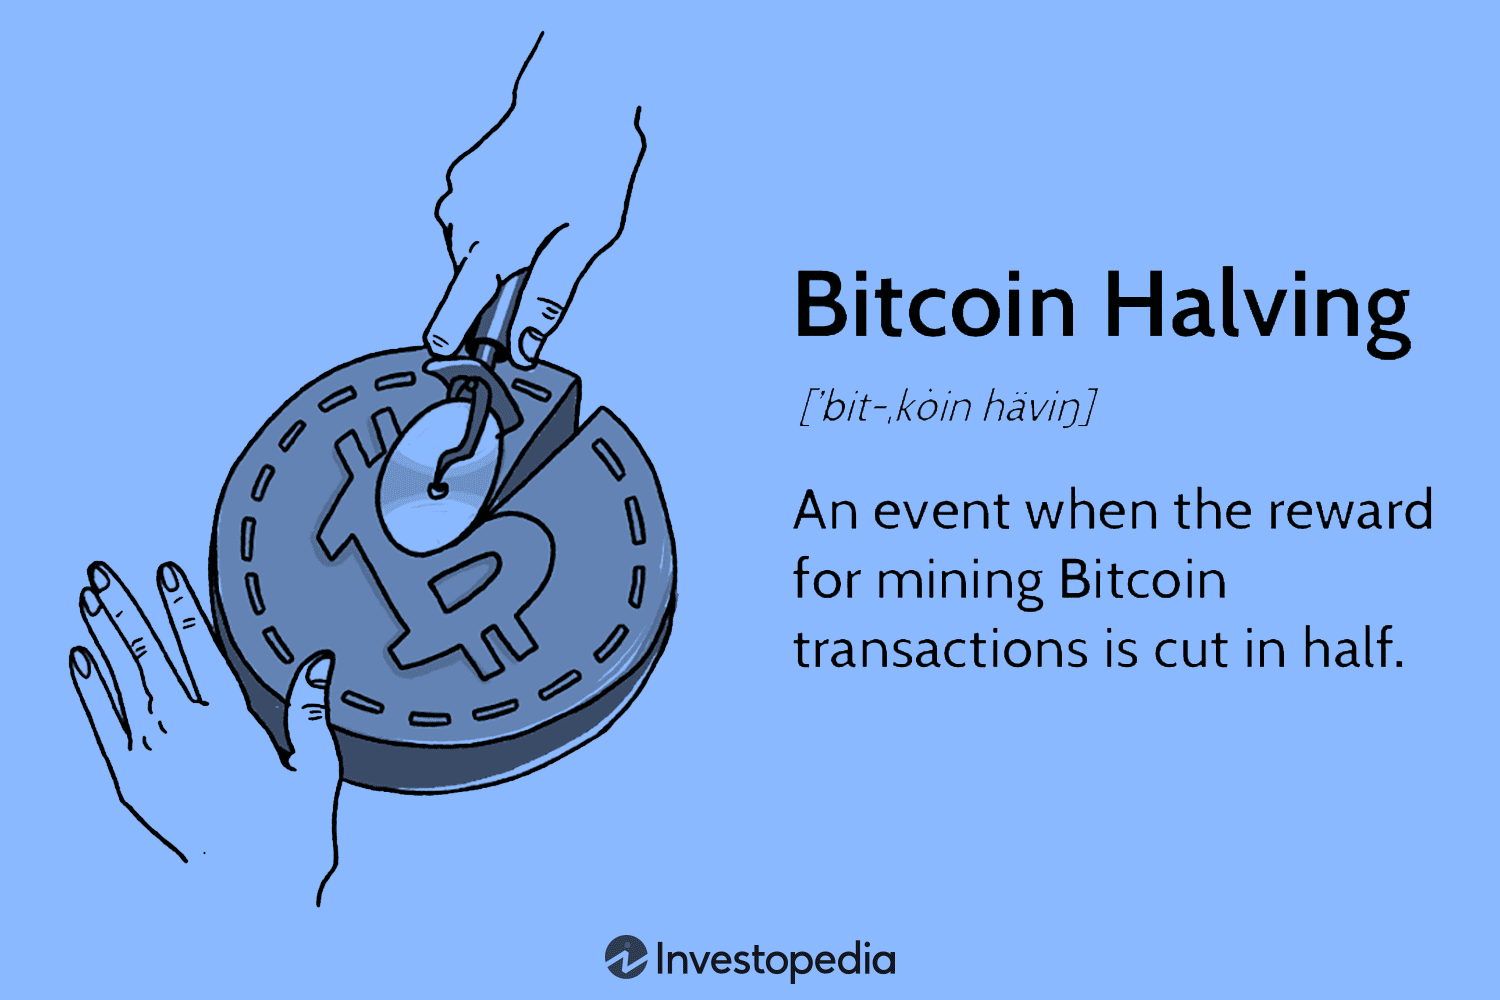 Bitcoin halving: Explained